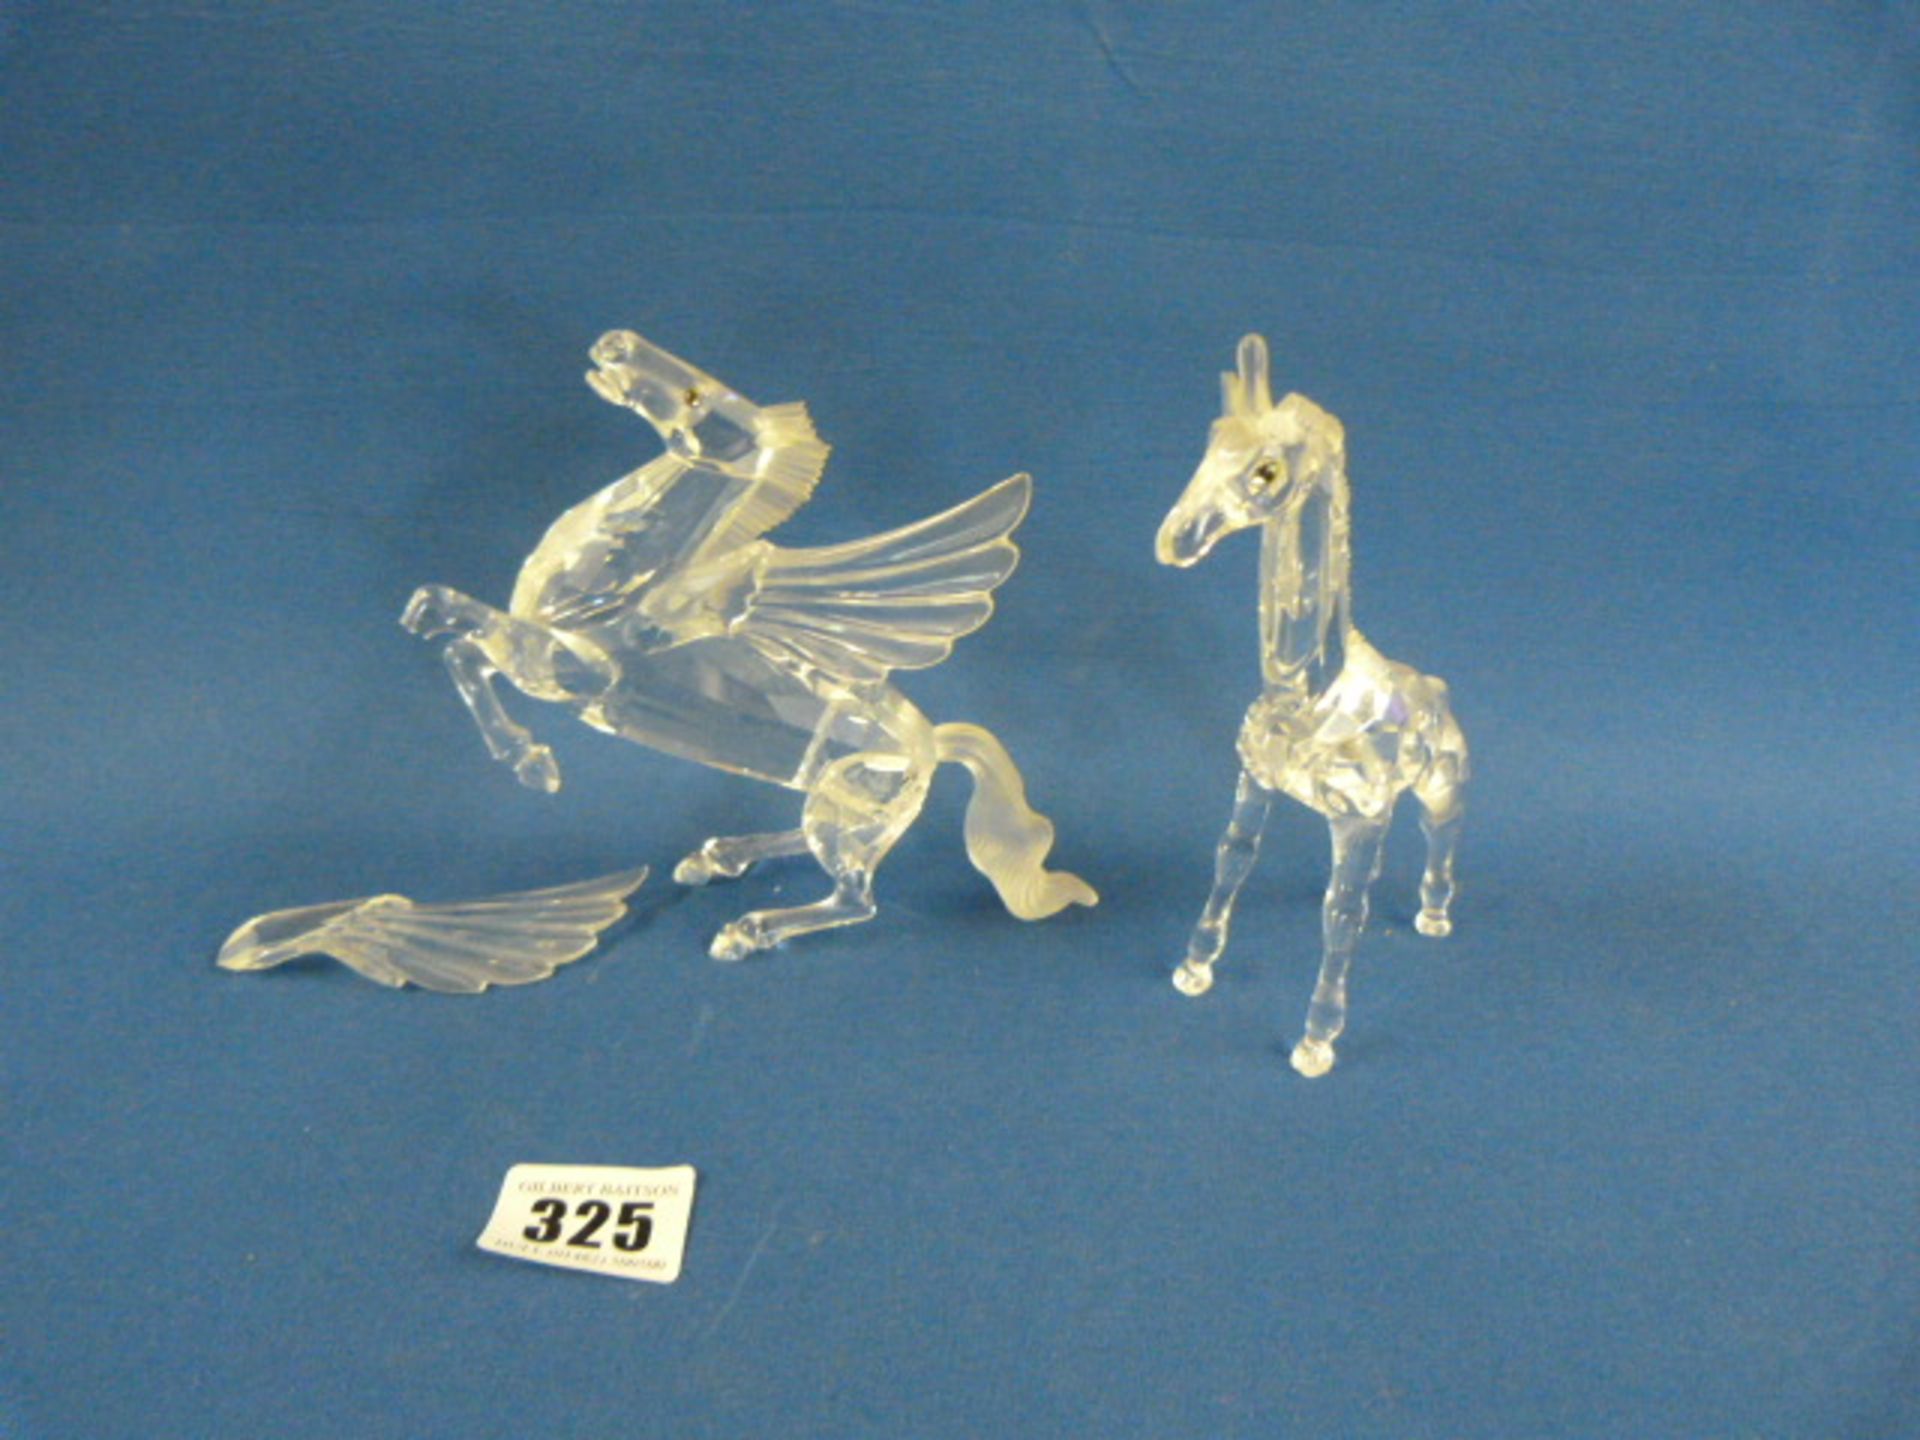 2 Swarovski Figurines - The Giraffe & The Pegasus Both AF